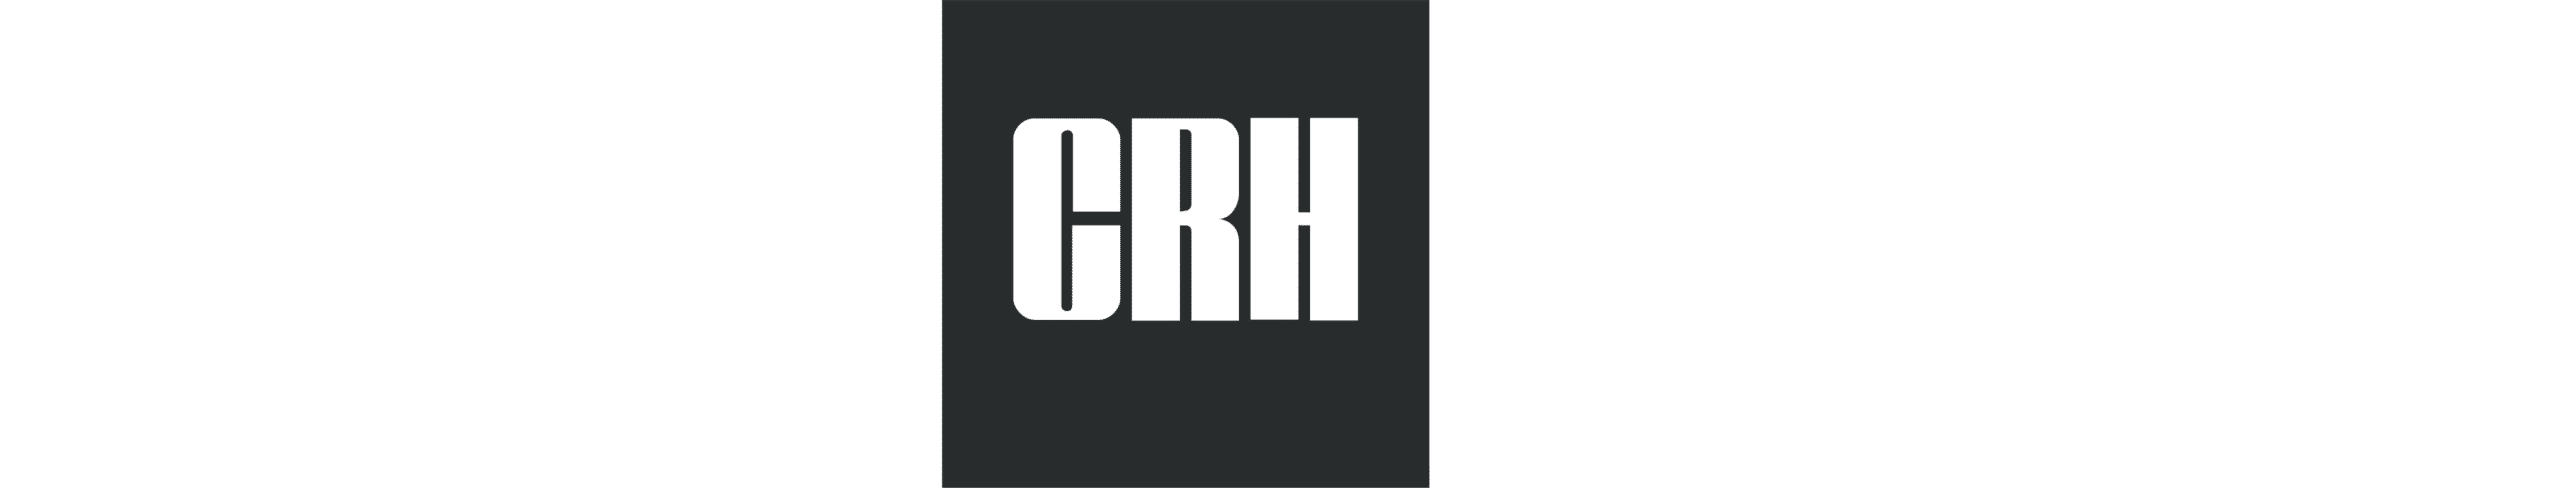 CRH-logo-1.png